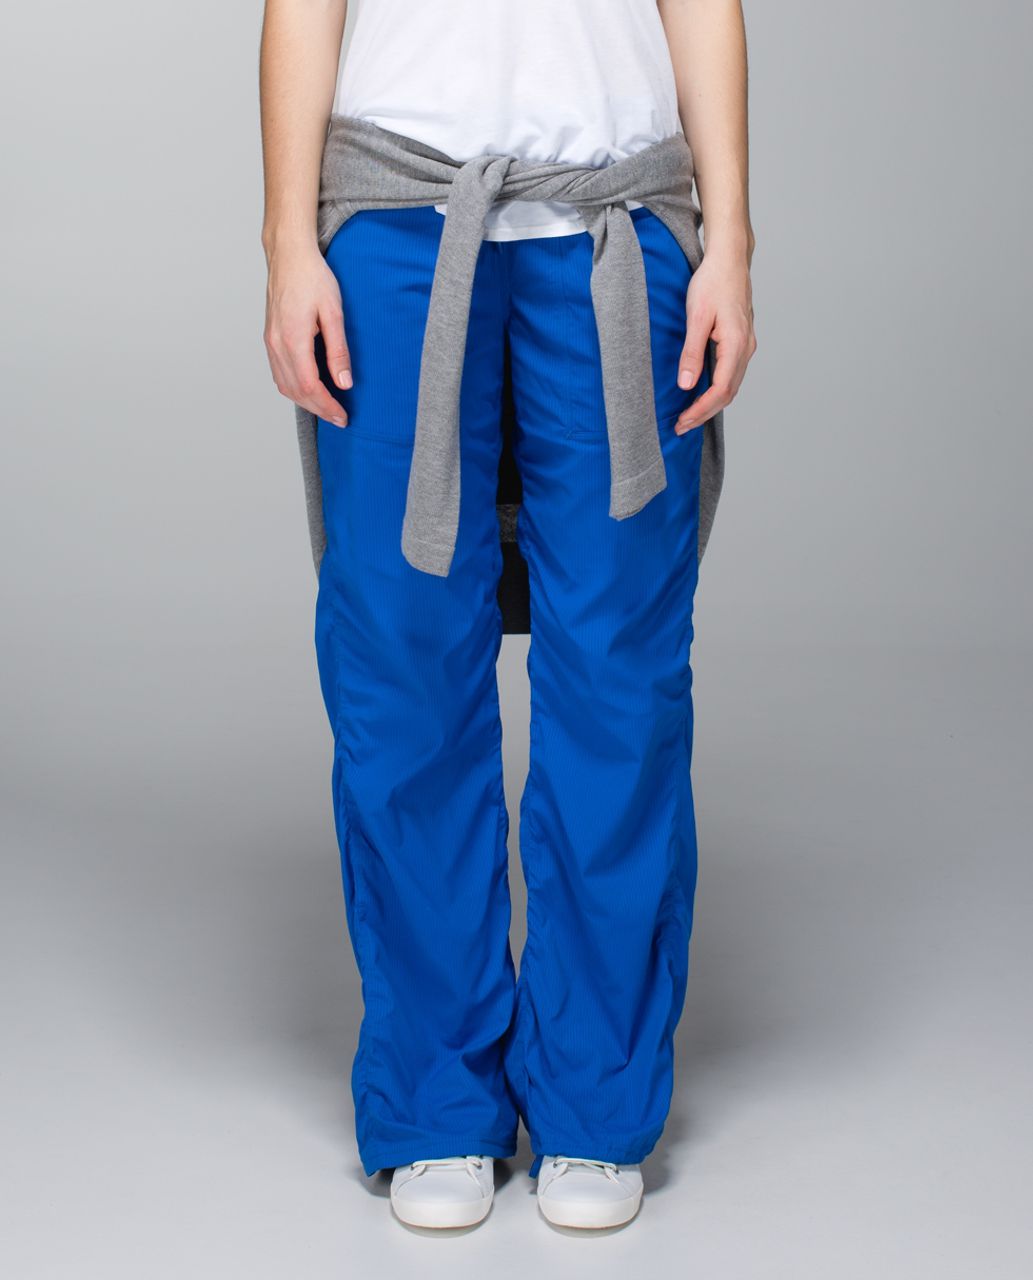 Lululemon Dance Studio Pants Lined Cinch Hem Blue Striped Sz 4 Wide Leg